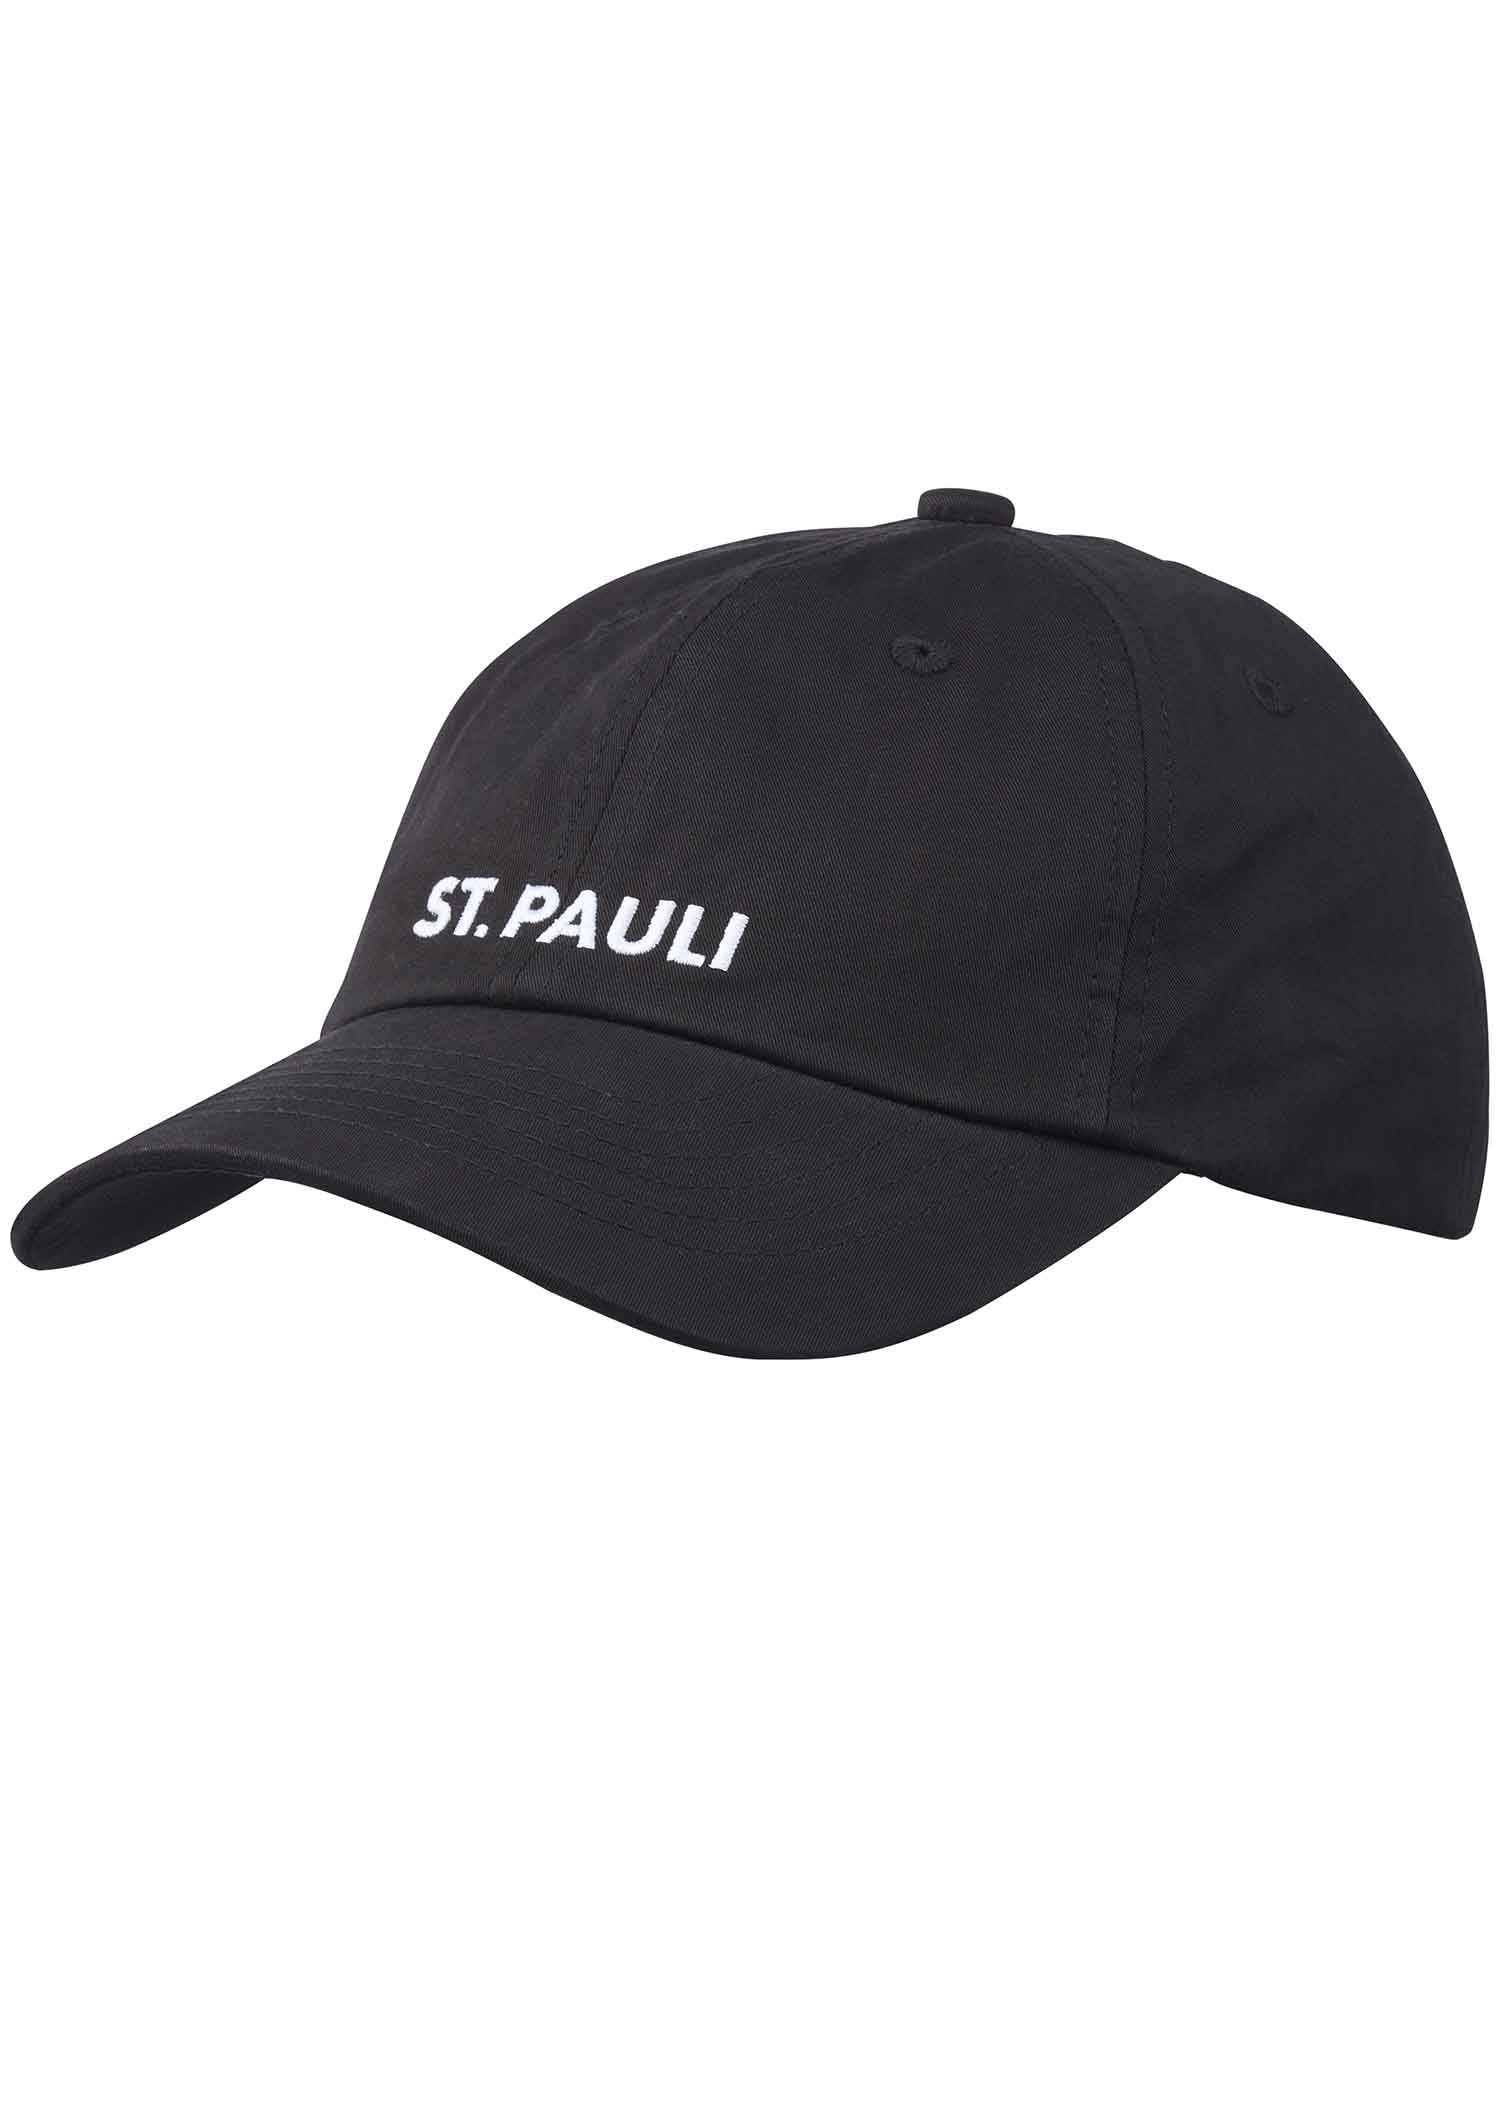 Cap St. Pauli - black